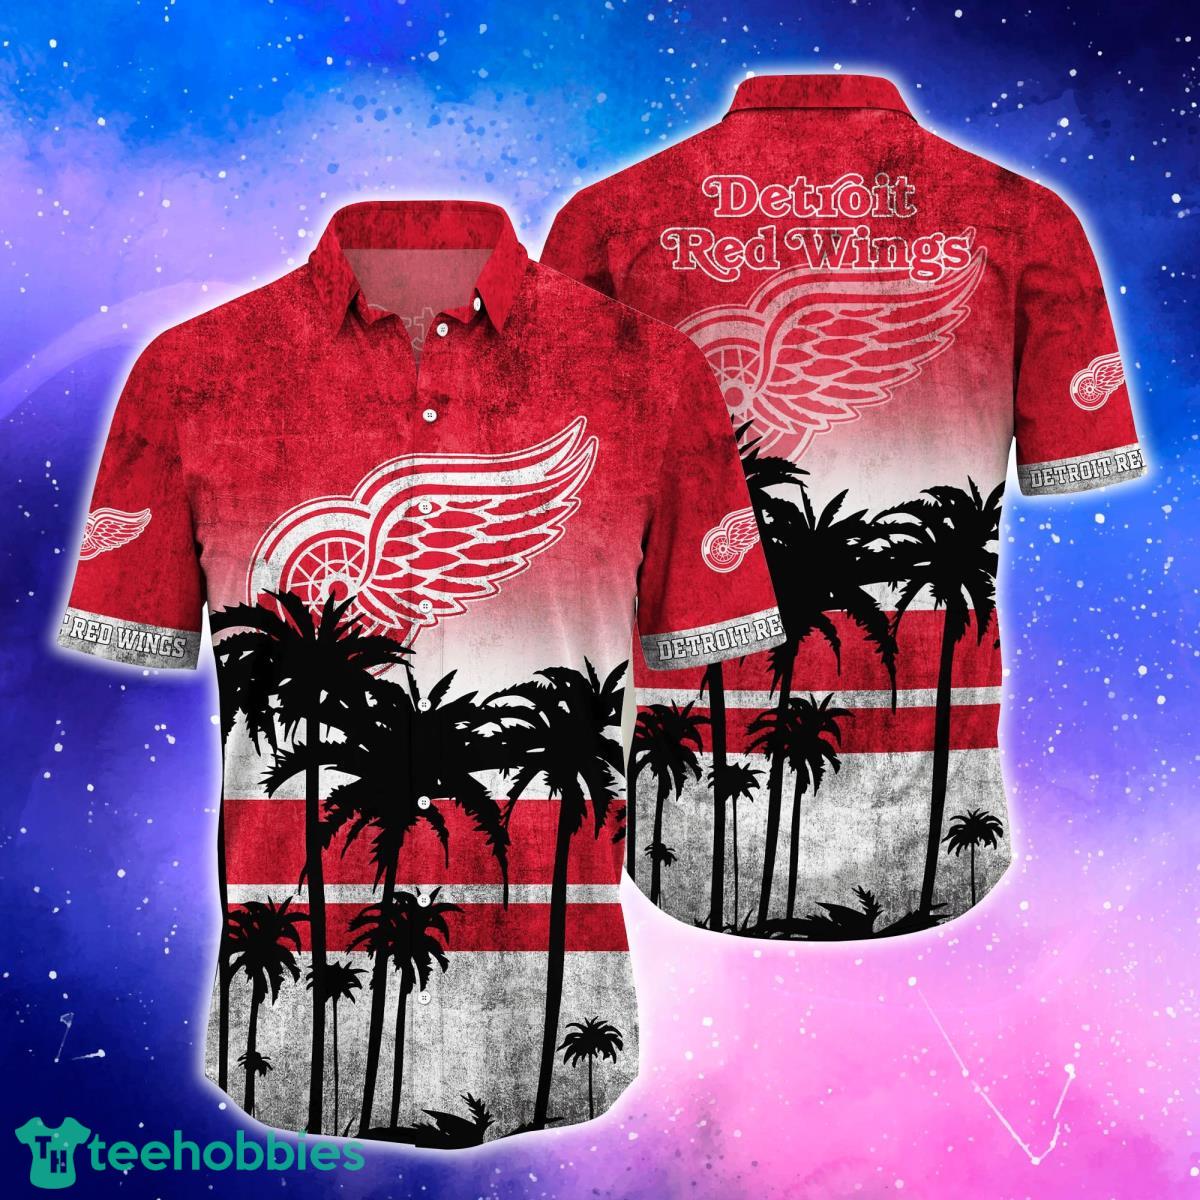 Detroit Red Wings NHLTropical Hawaiian Shirt For Fans - Banantees